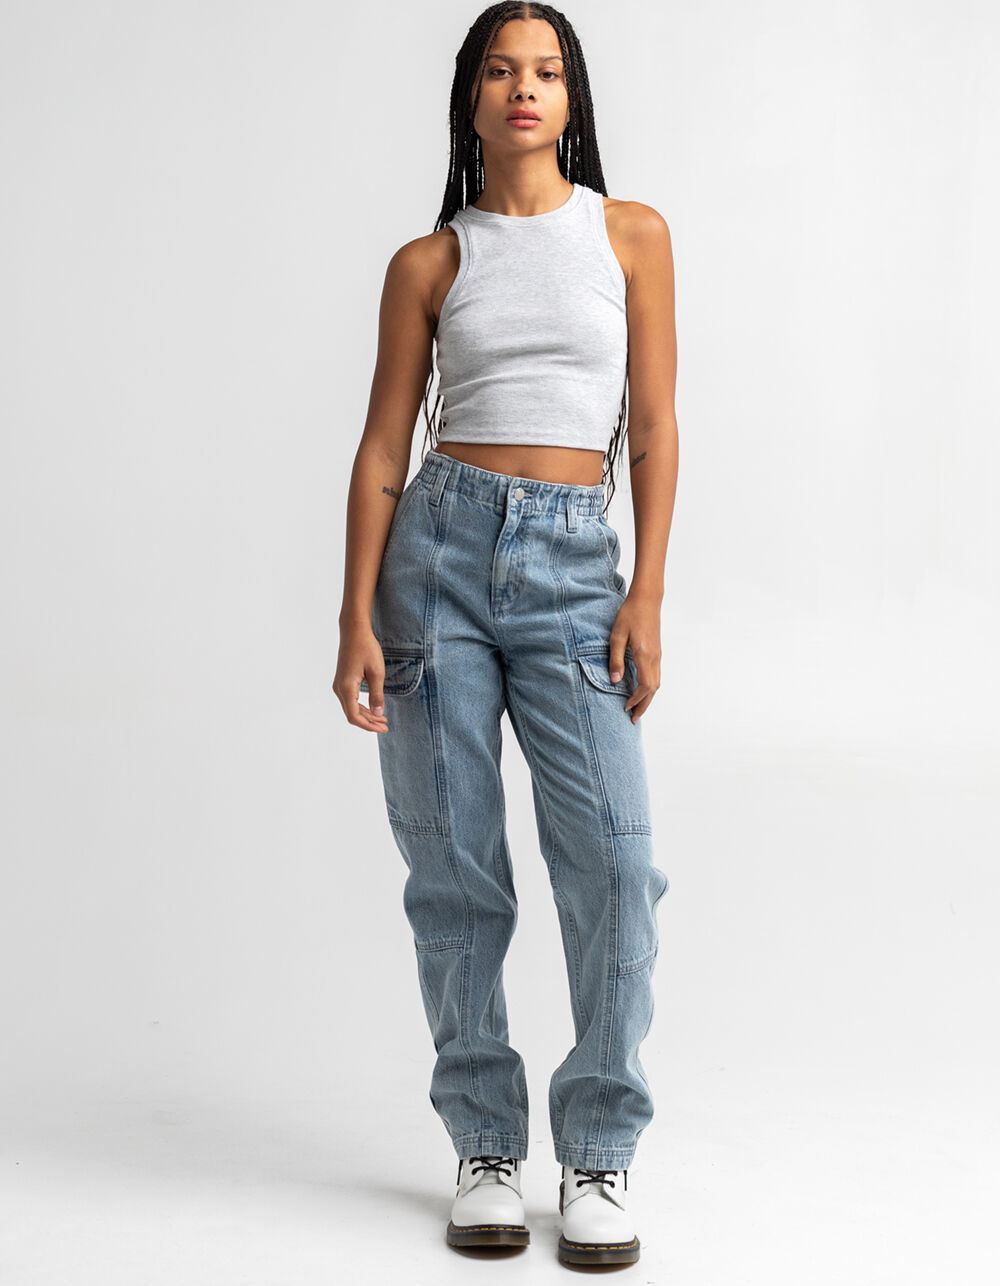 Buy Pants for Women Online | The Tinsel Rack